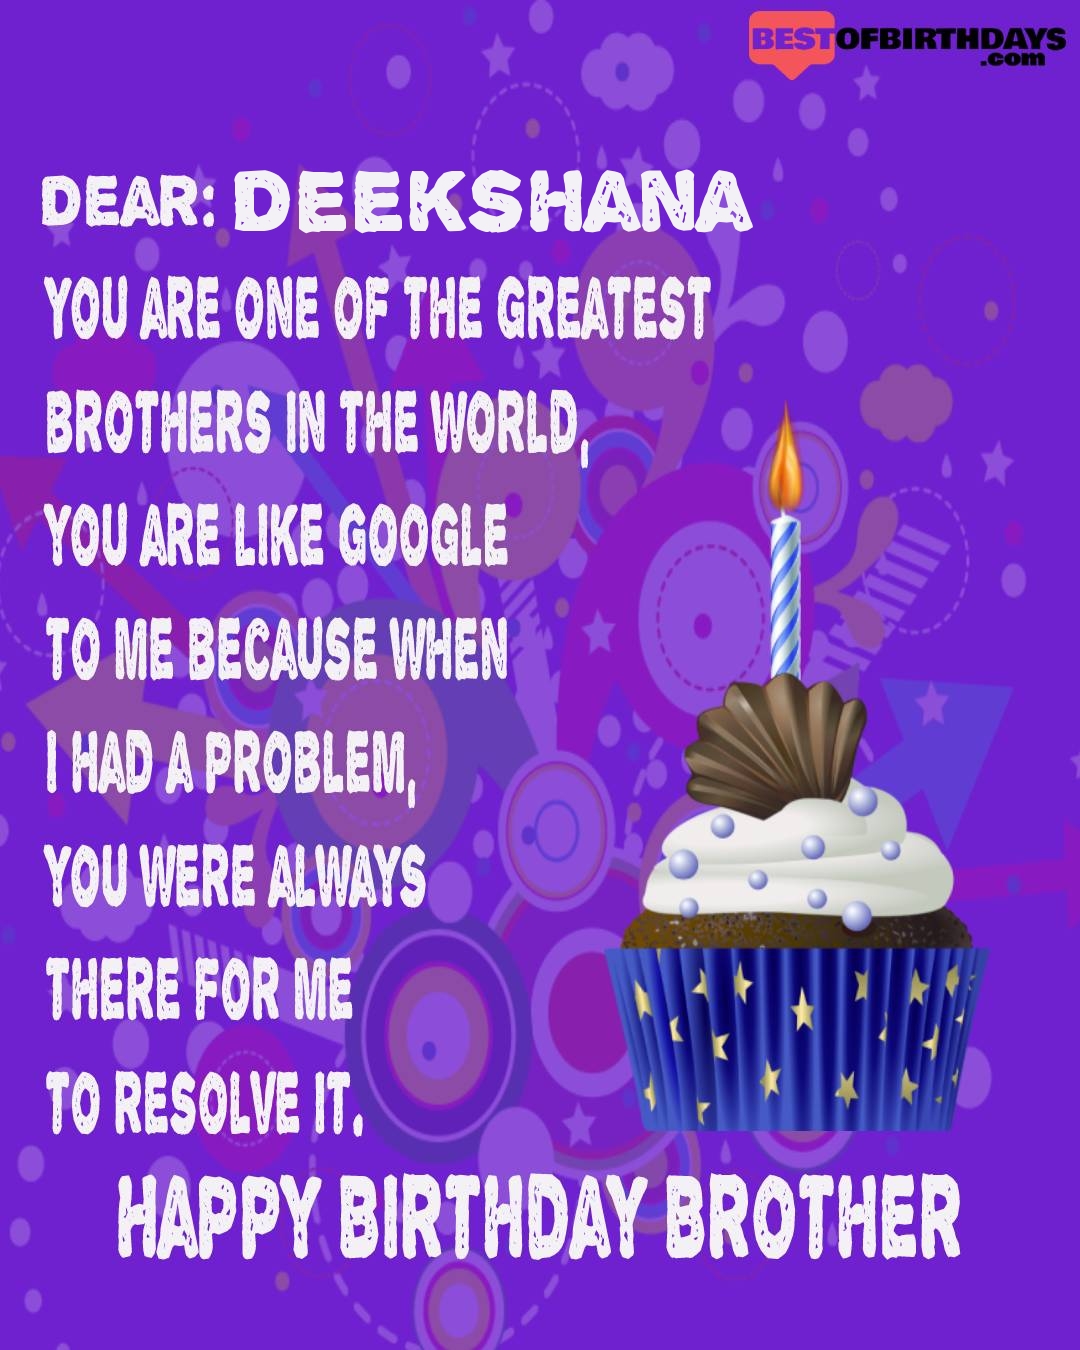 Happy birthday deekshana bhai brother bro